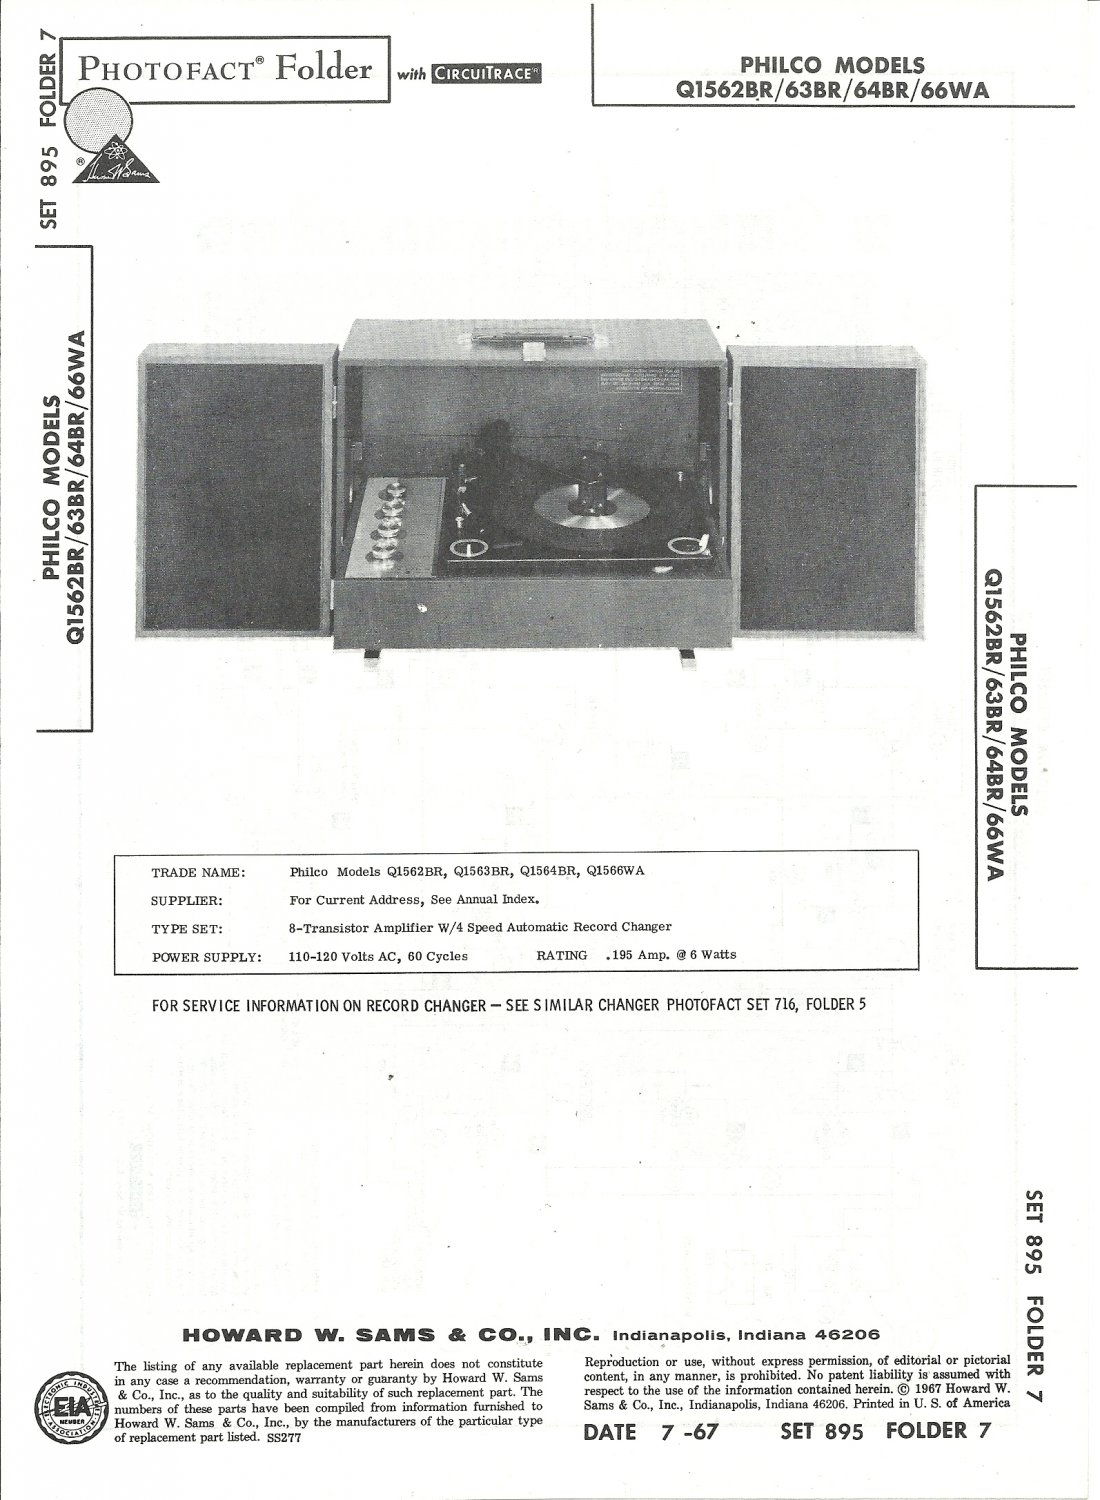 SAMS Photofact - Set 895 - Folder 7 - Jul 1967 - PHILCO MODELS Q1562BR/63BR/64BR/66WA